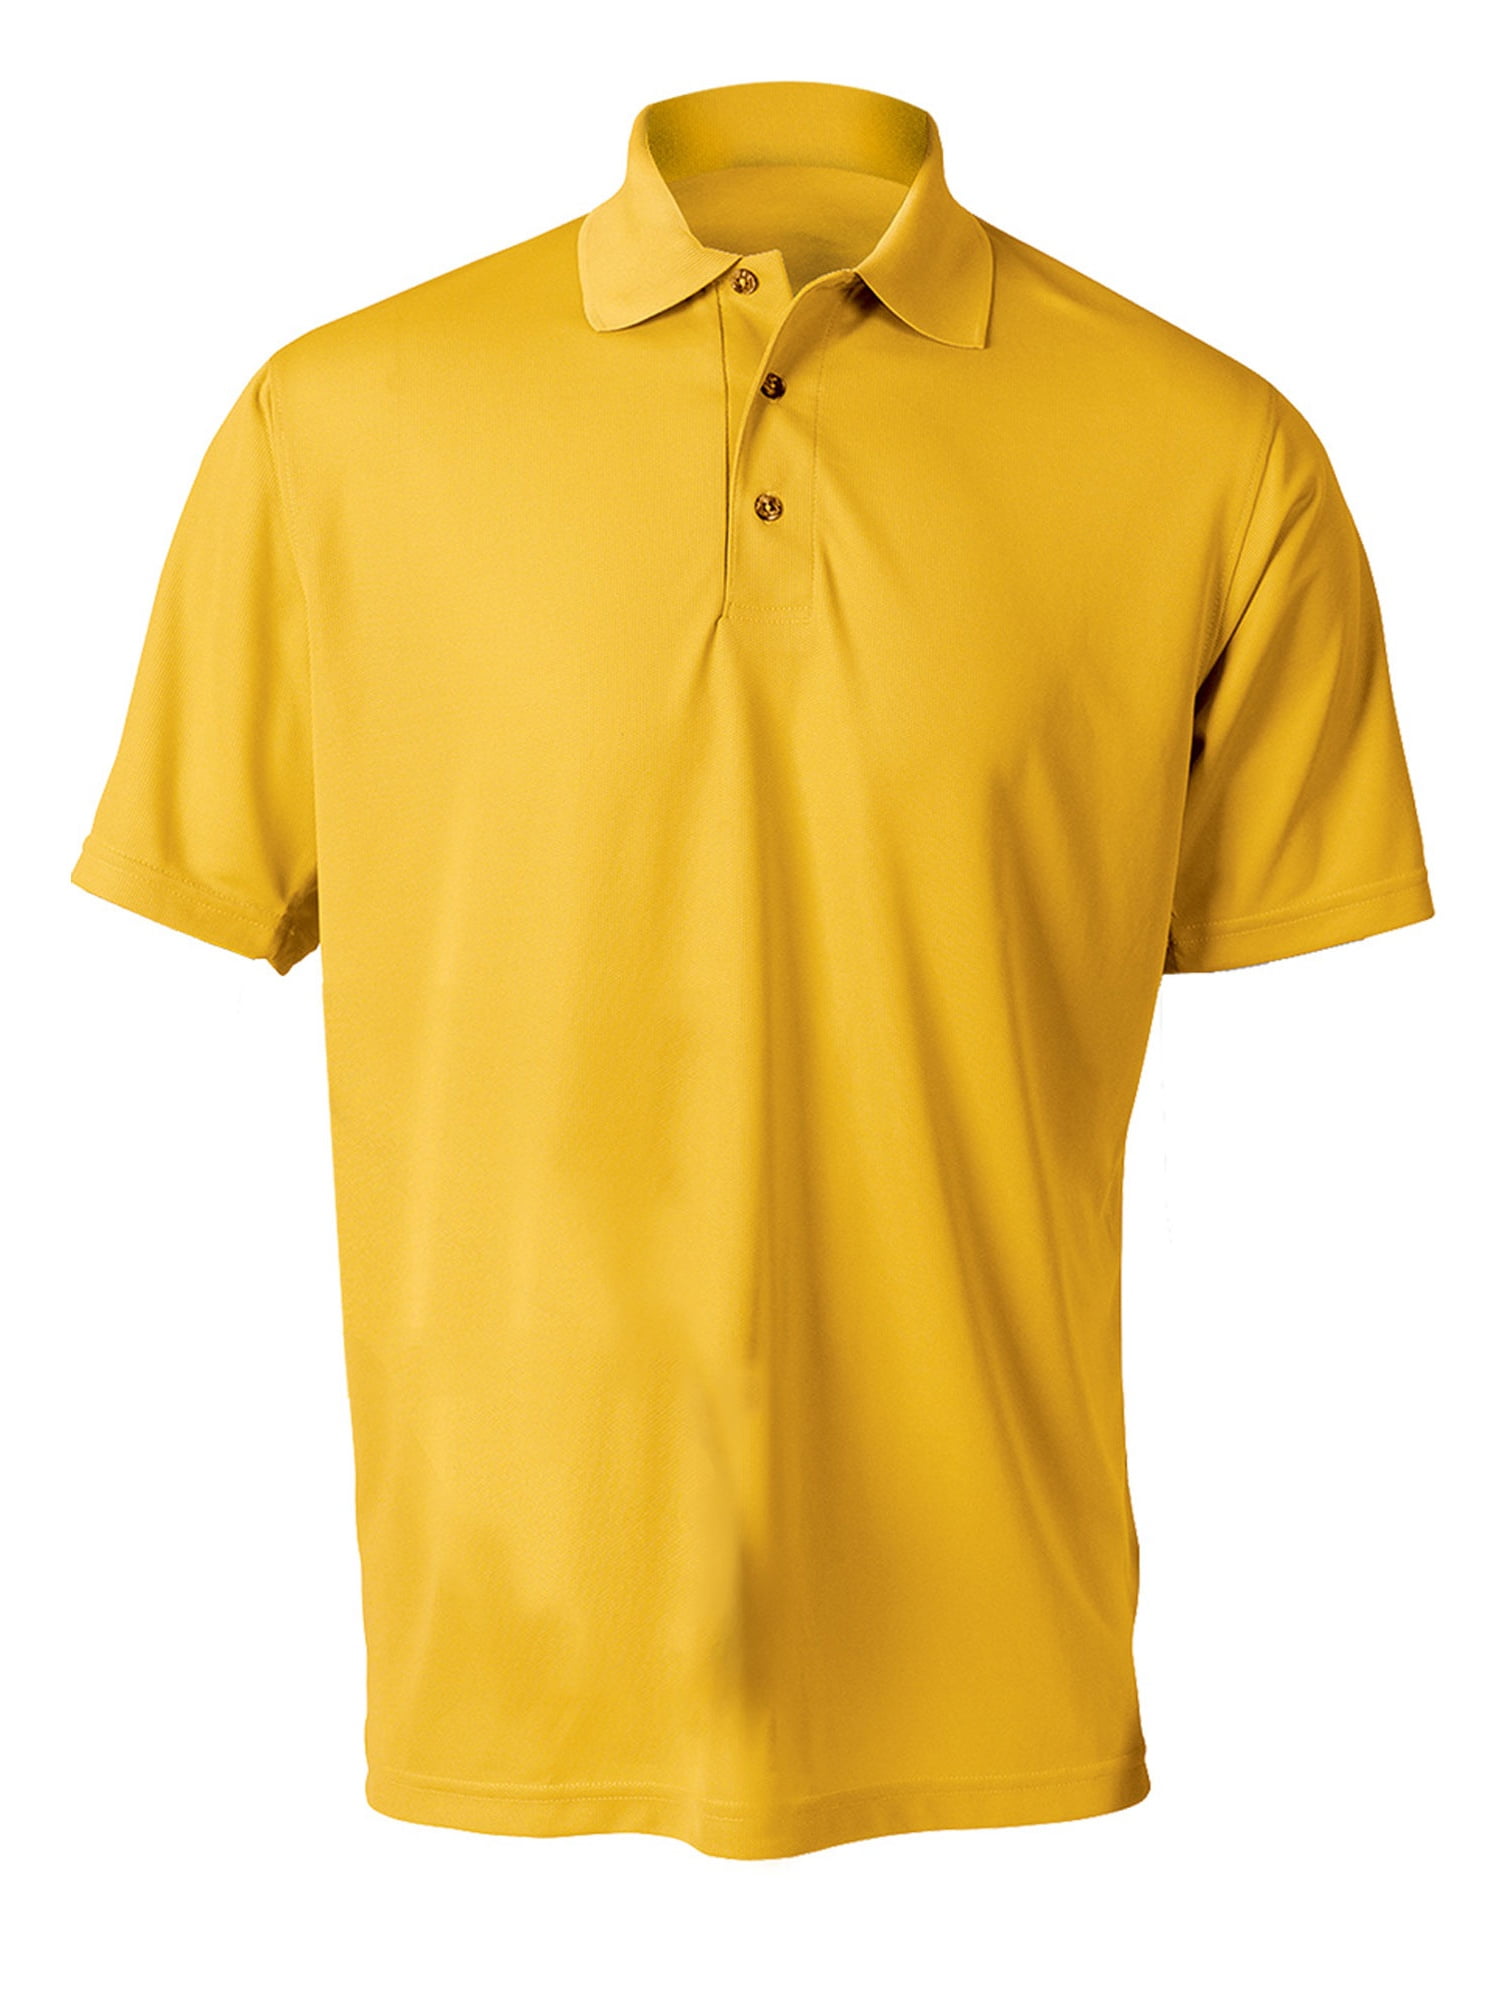 Paragon Men's Anti Microbial 30 Upf Protection Polo Shirt, Style 100